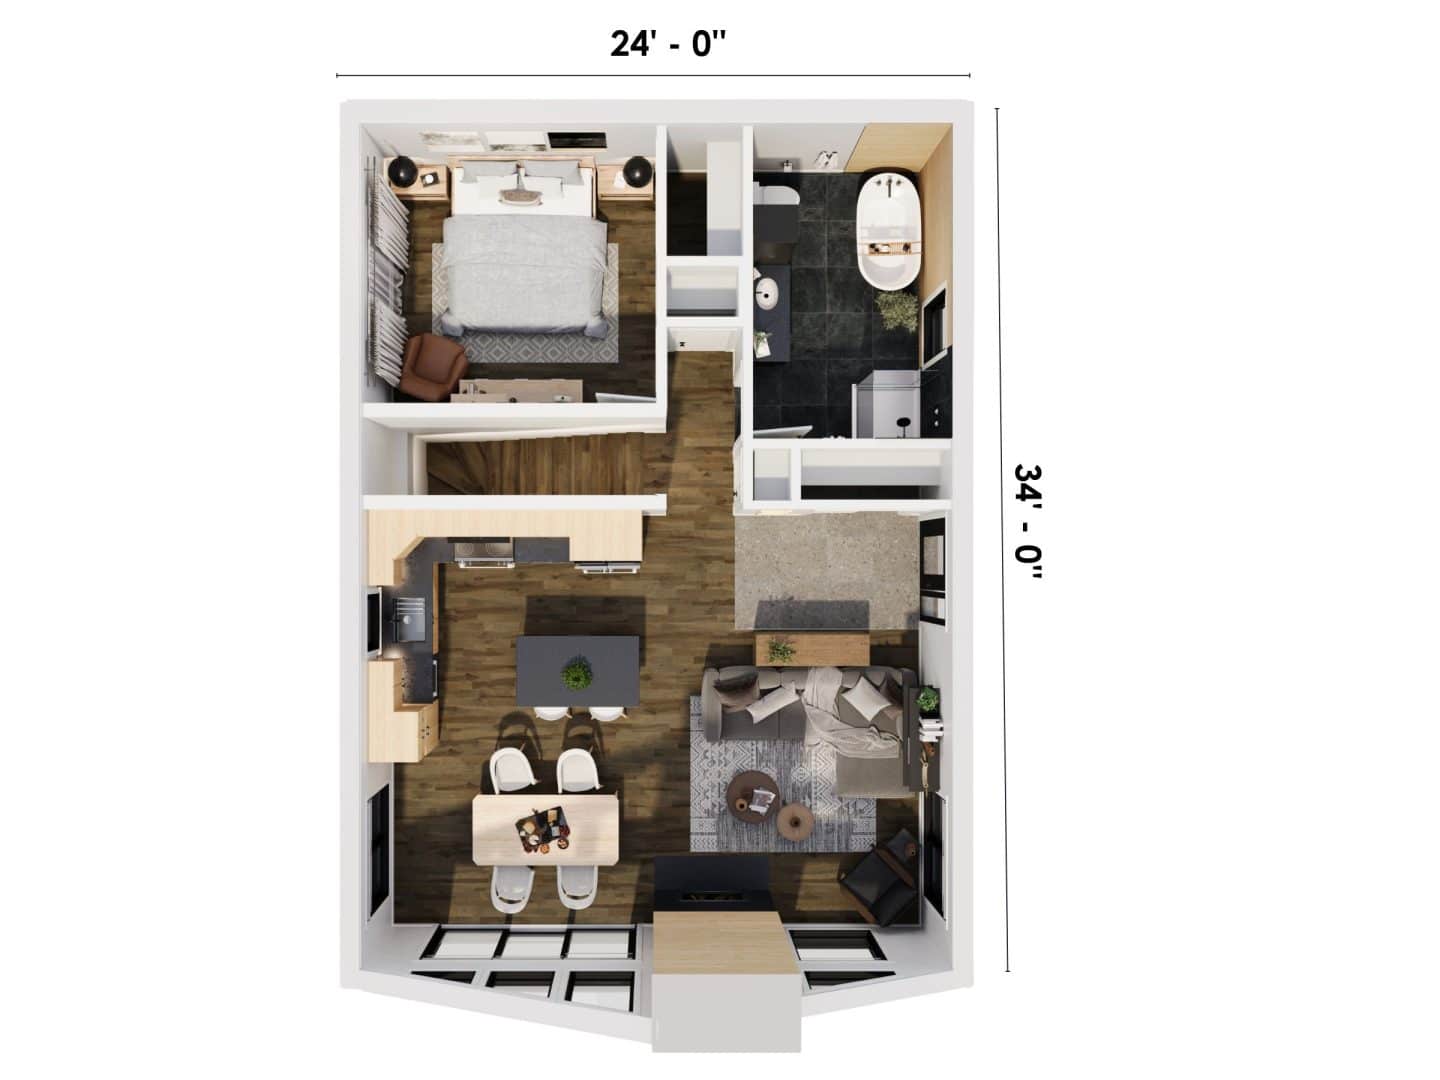 The Noa model is a Scandinavian-style bungalow. 3D plan view